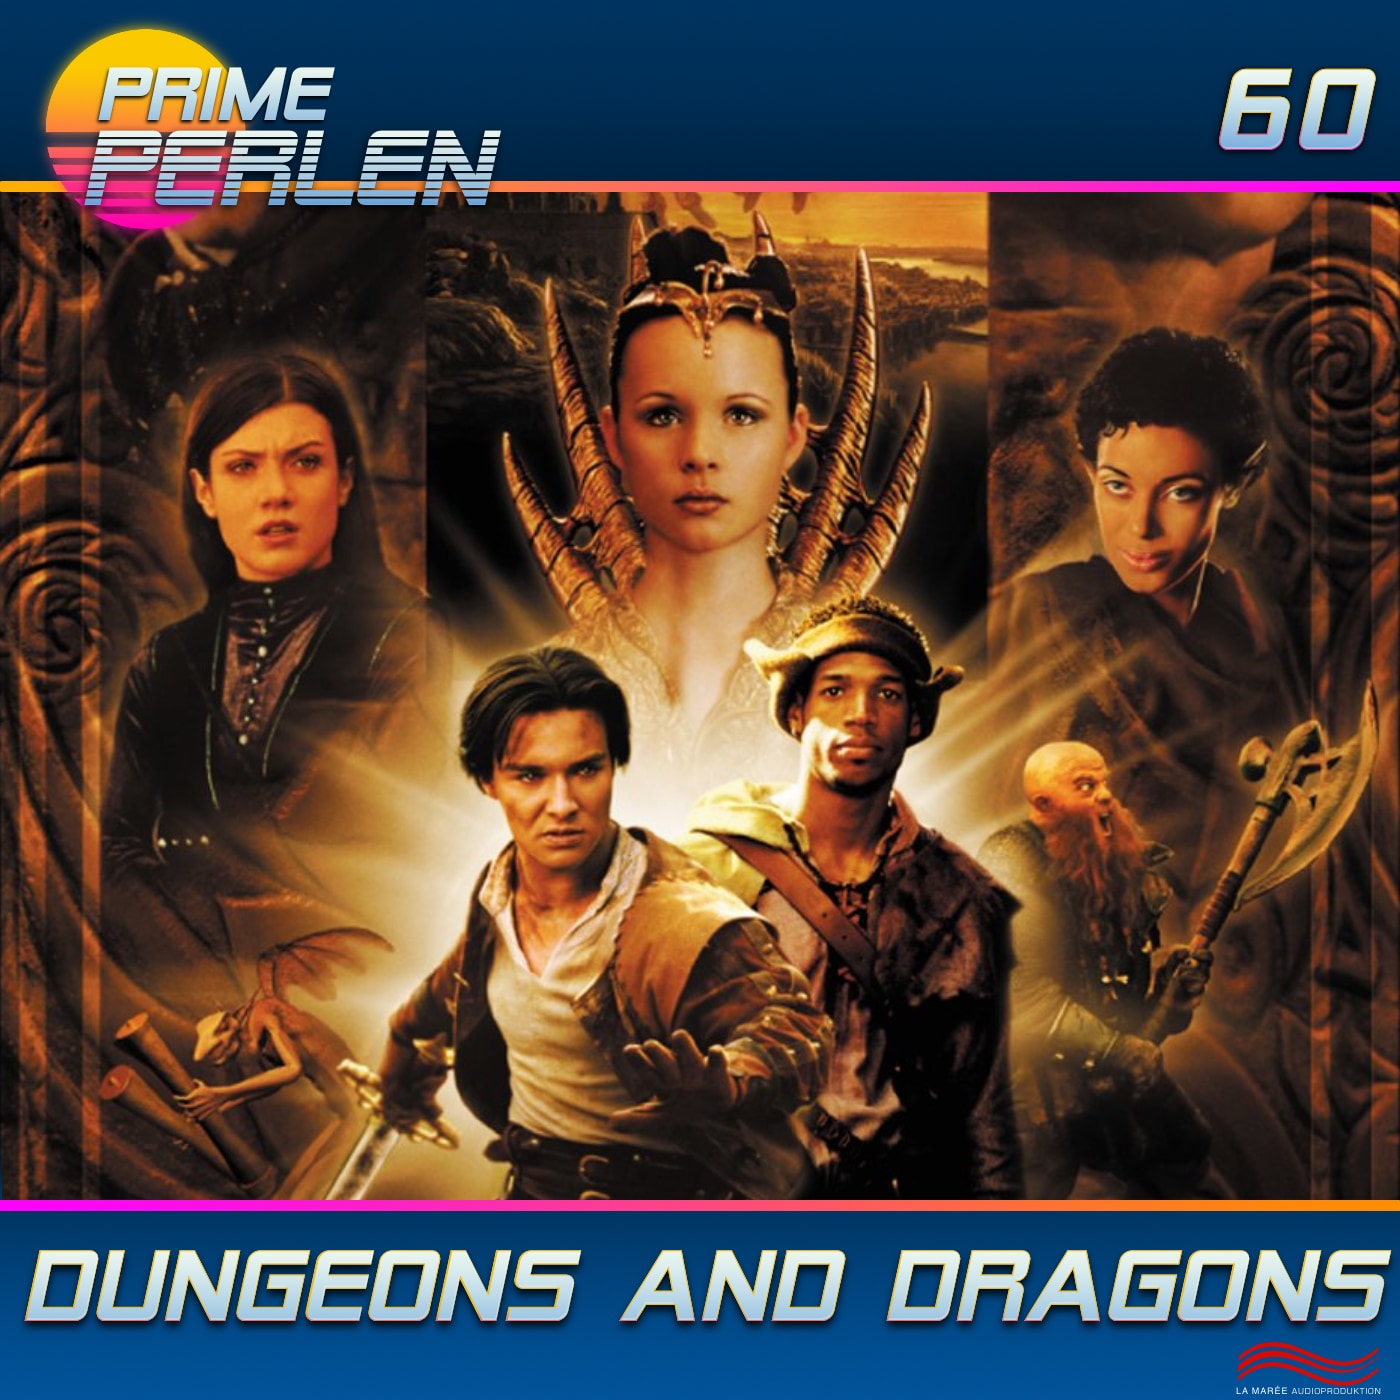 Prime Perlen #60 – Dungeons & Dragons - Die Original-Trilogie